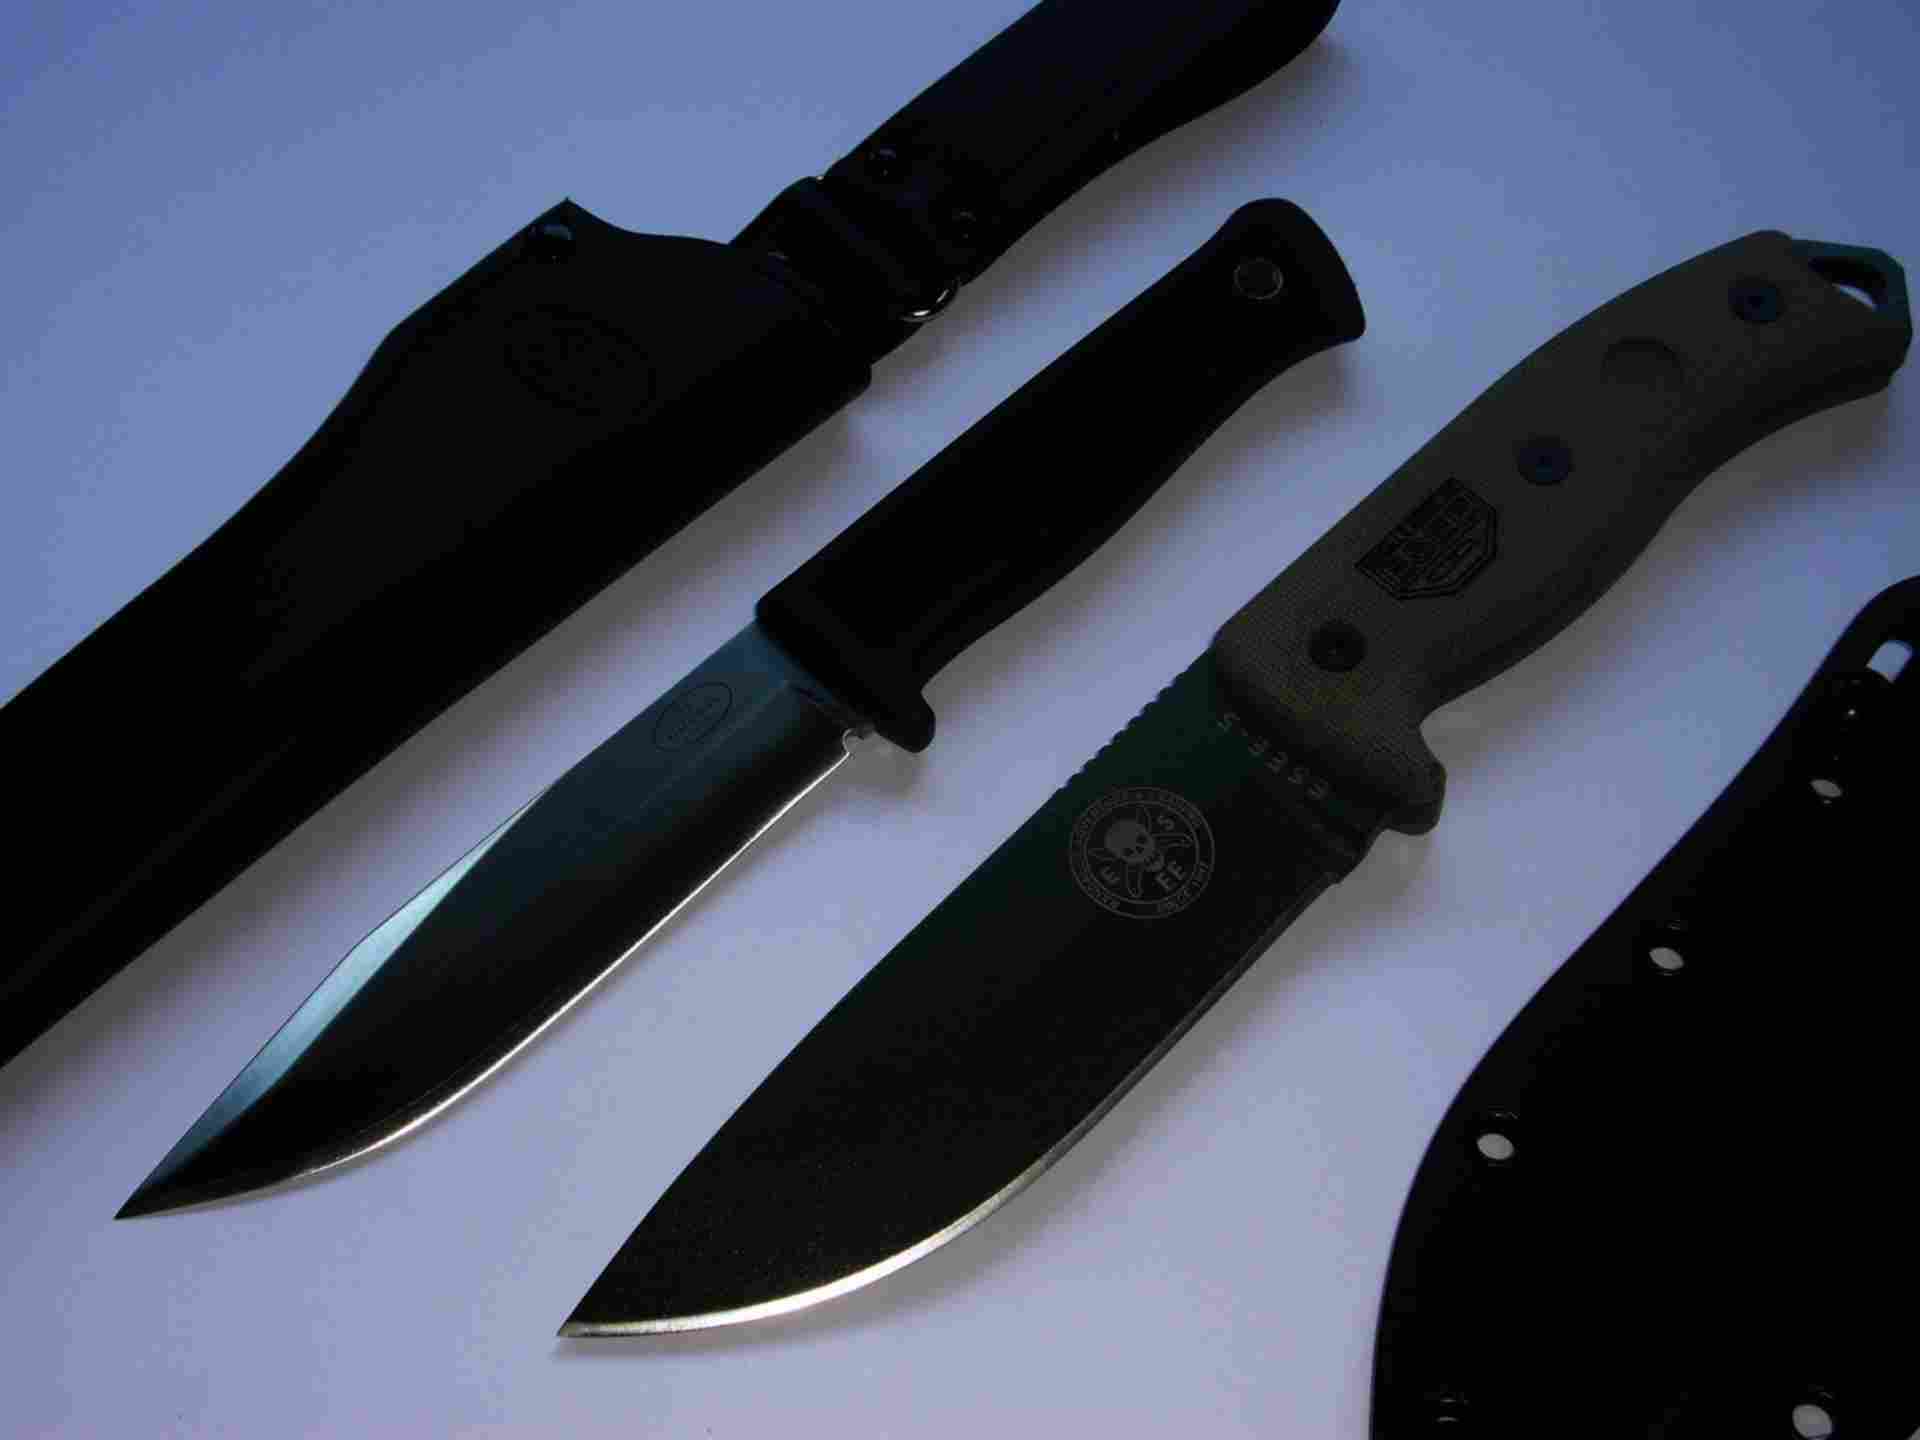 YJ; Luxe sale нож. Baars kat ch911dh купить ножи. Nightwolf ножи купить. Ножи купить в пензе